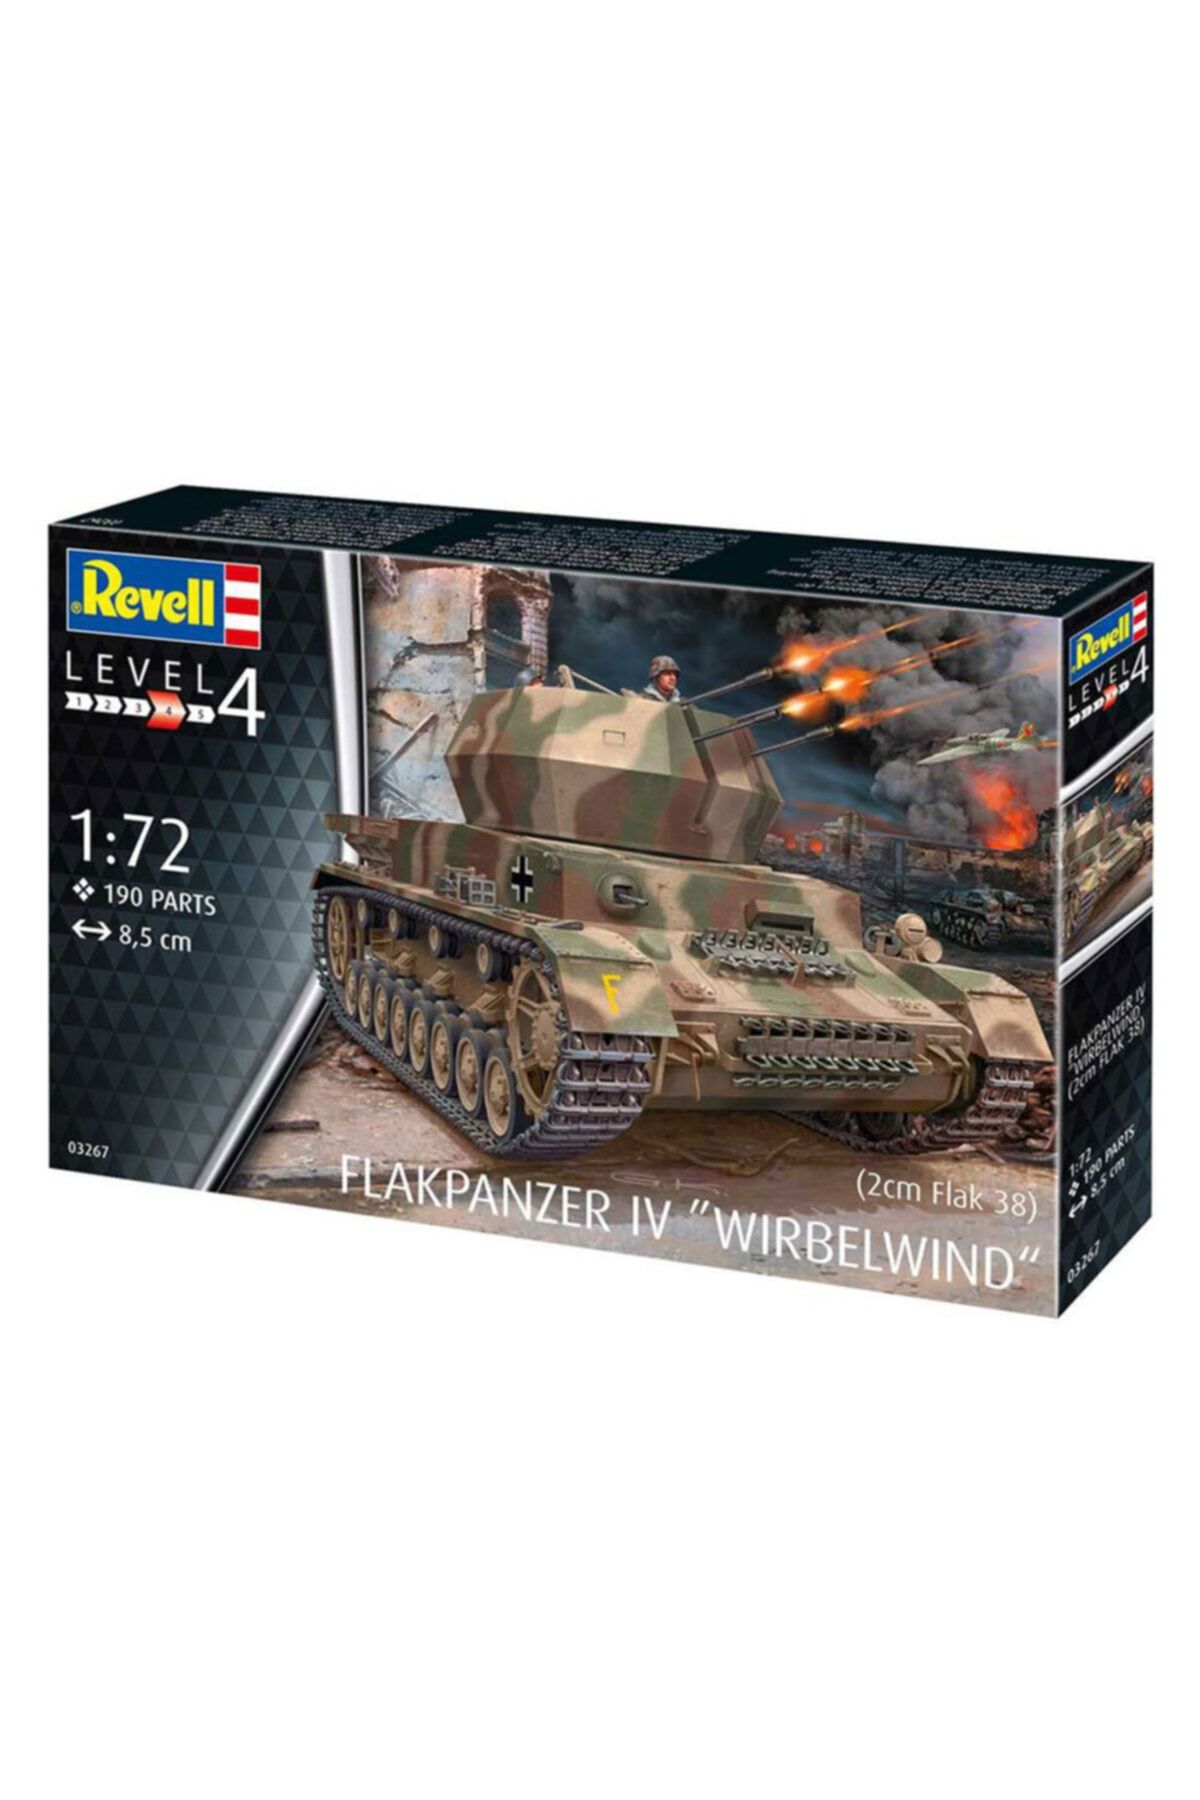 REVELL Maket Flakpanzer Iv Wirbelwind Flak 38 Vso03267